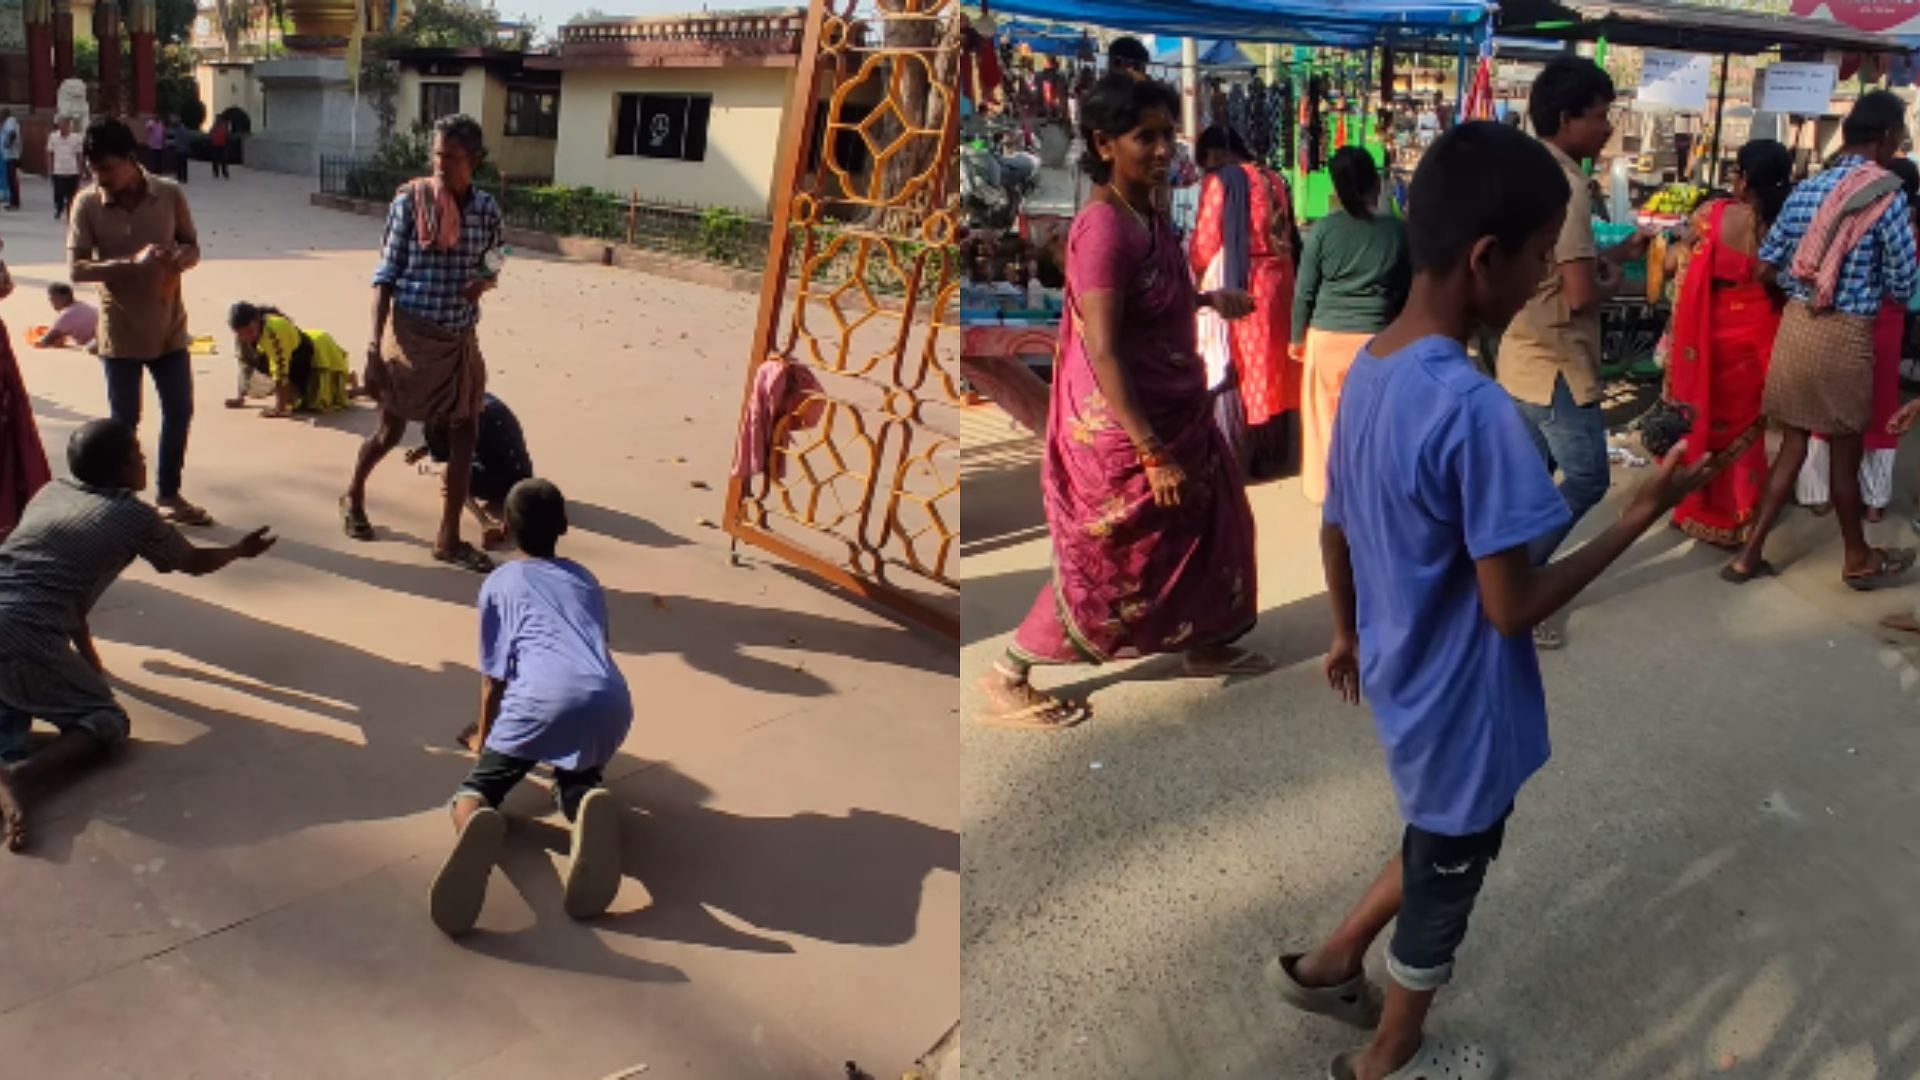 gaya child begging at temple gate shows real acting skill video viral on social media